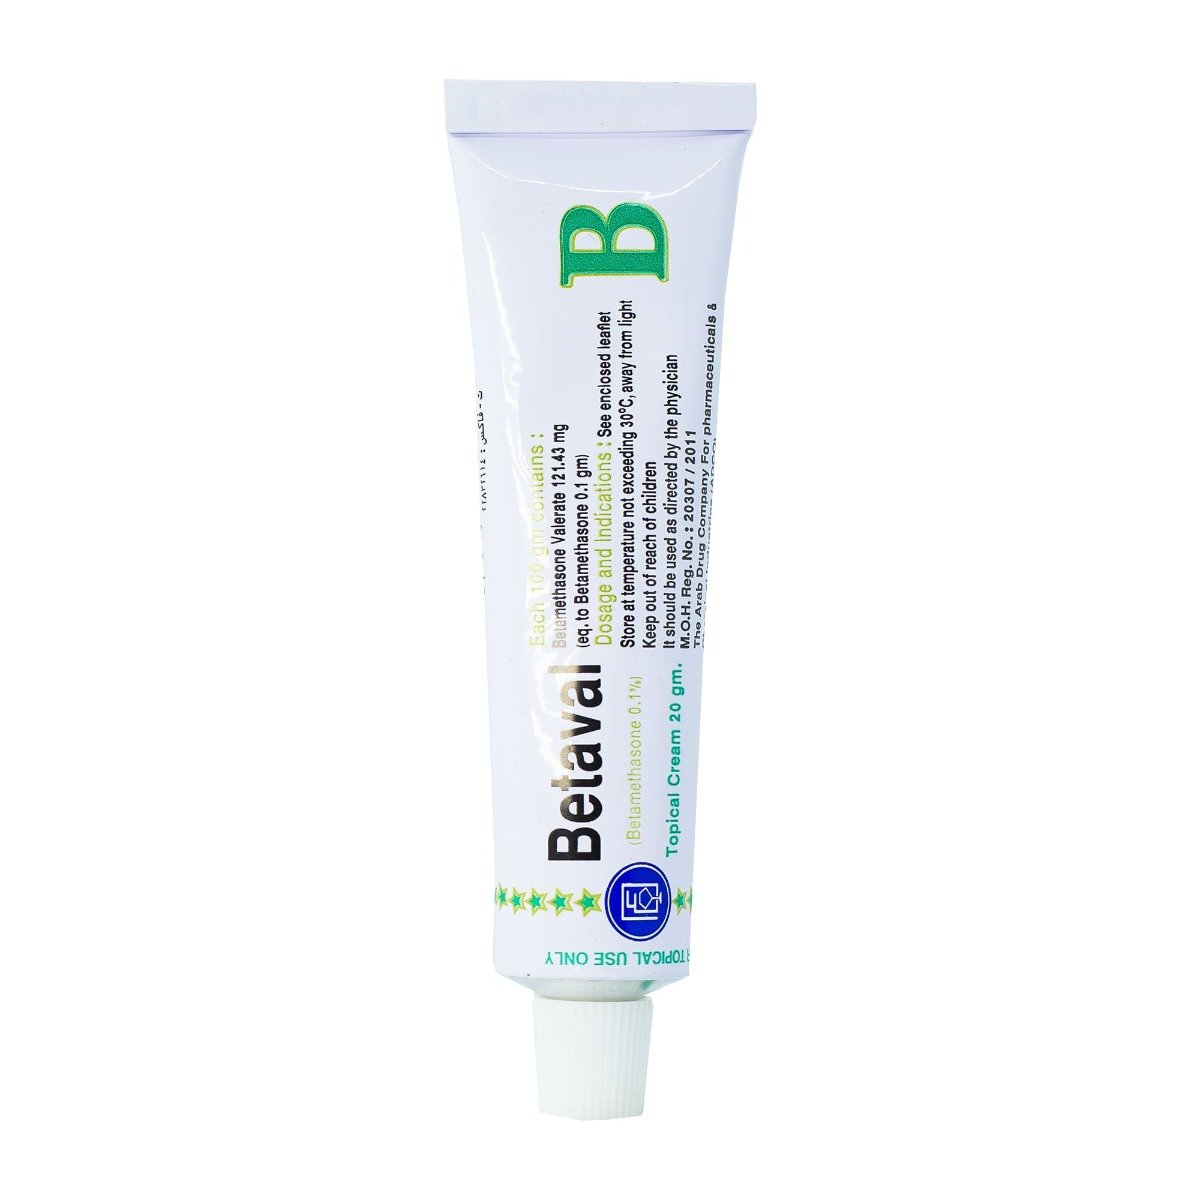 Betaval 0.1 % Cream - 20 gm - Bloom Pharmacy